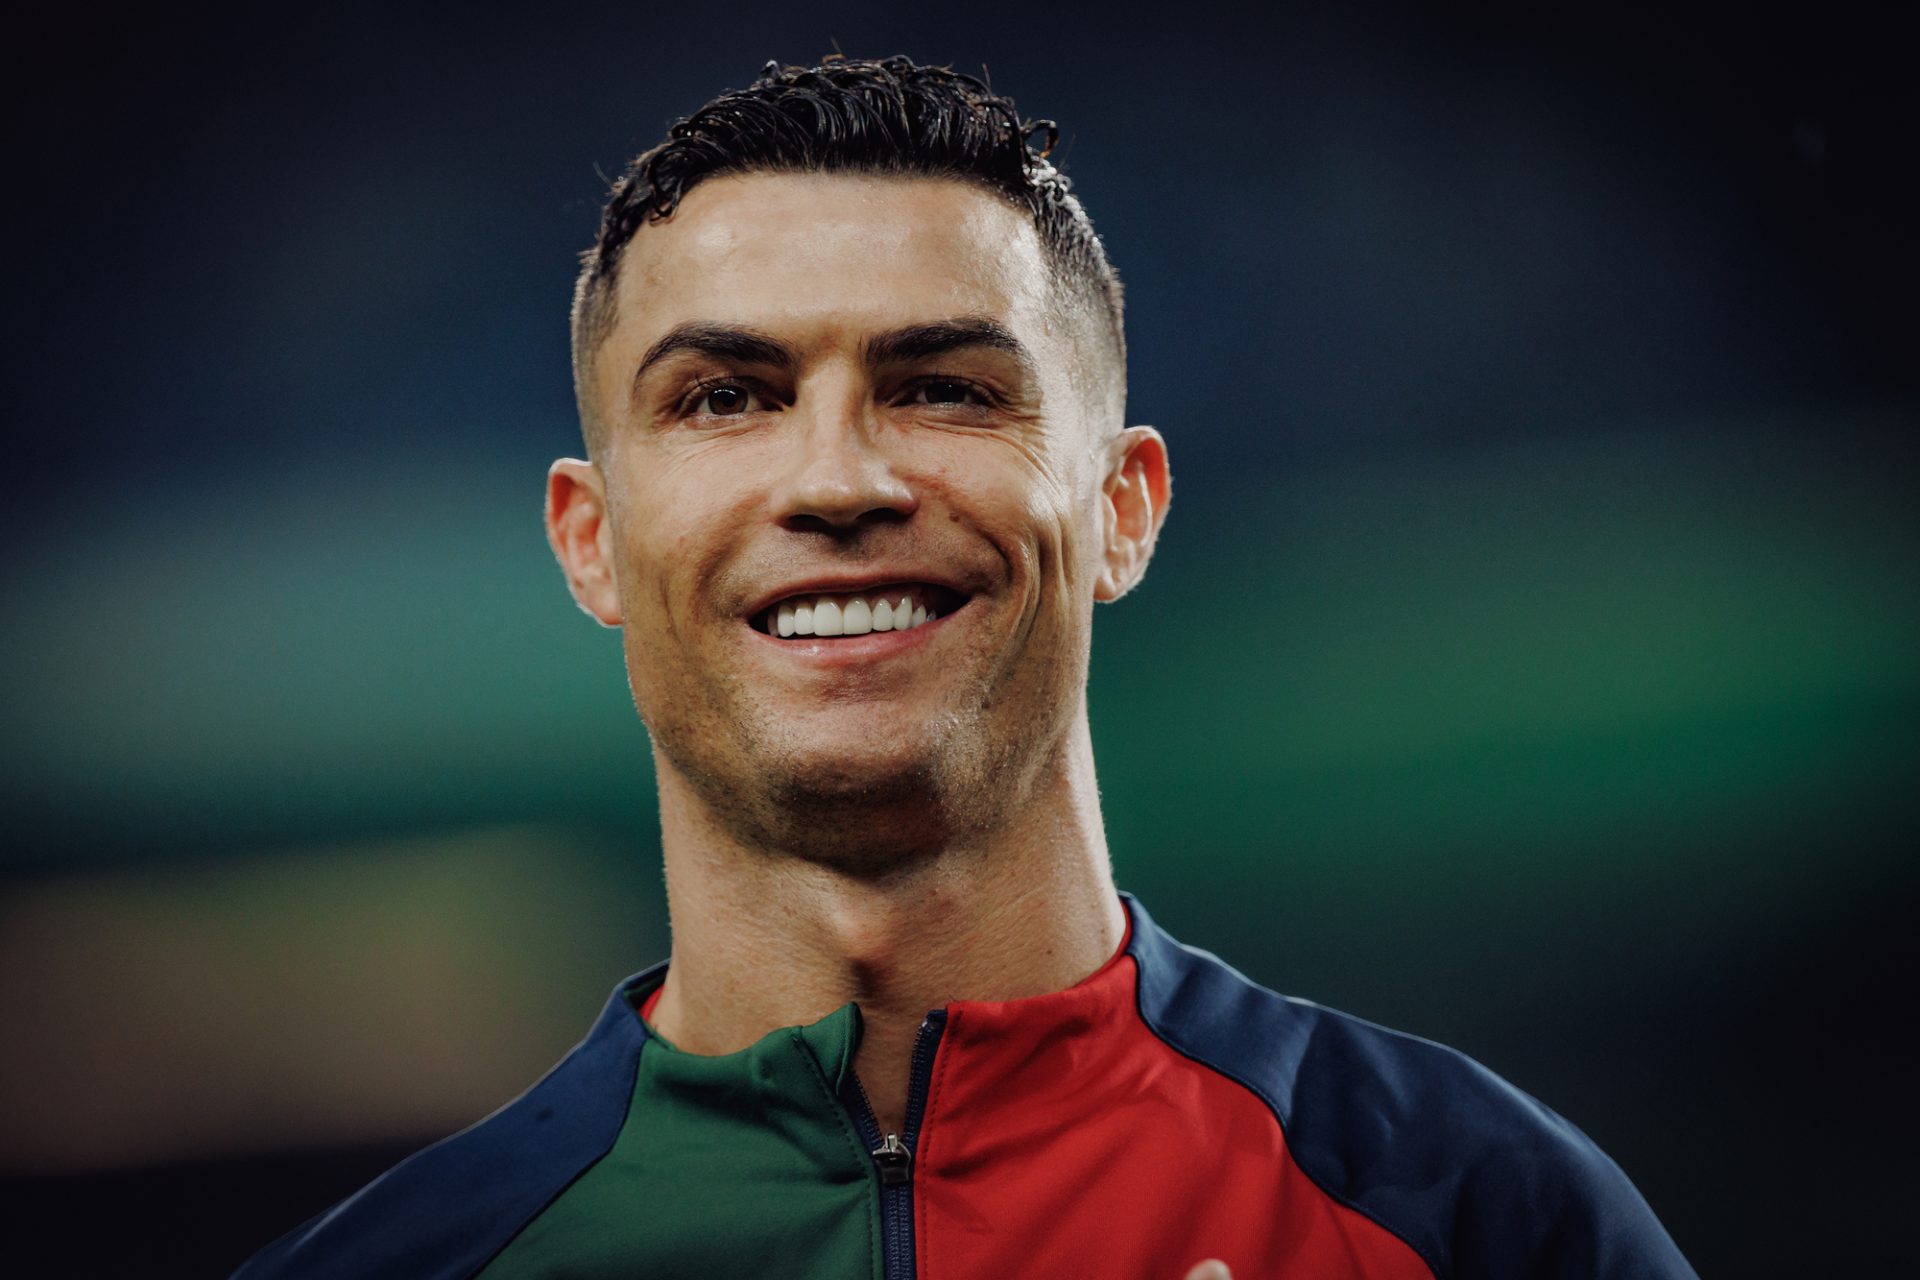 Ronaldo Set To Make History With Record Sixth Euros Appearance